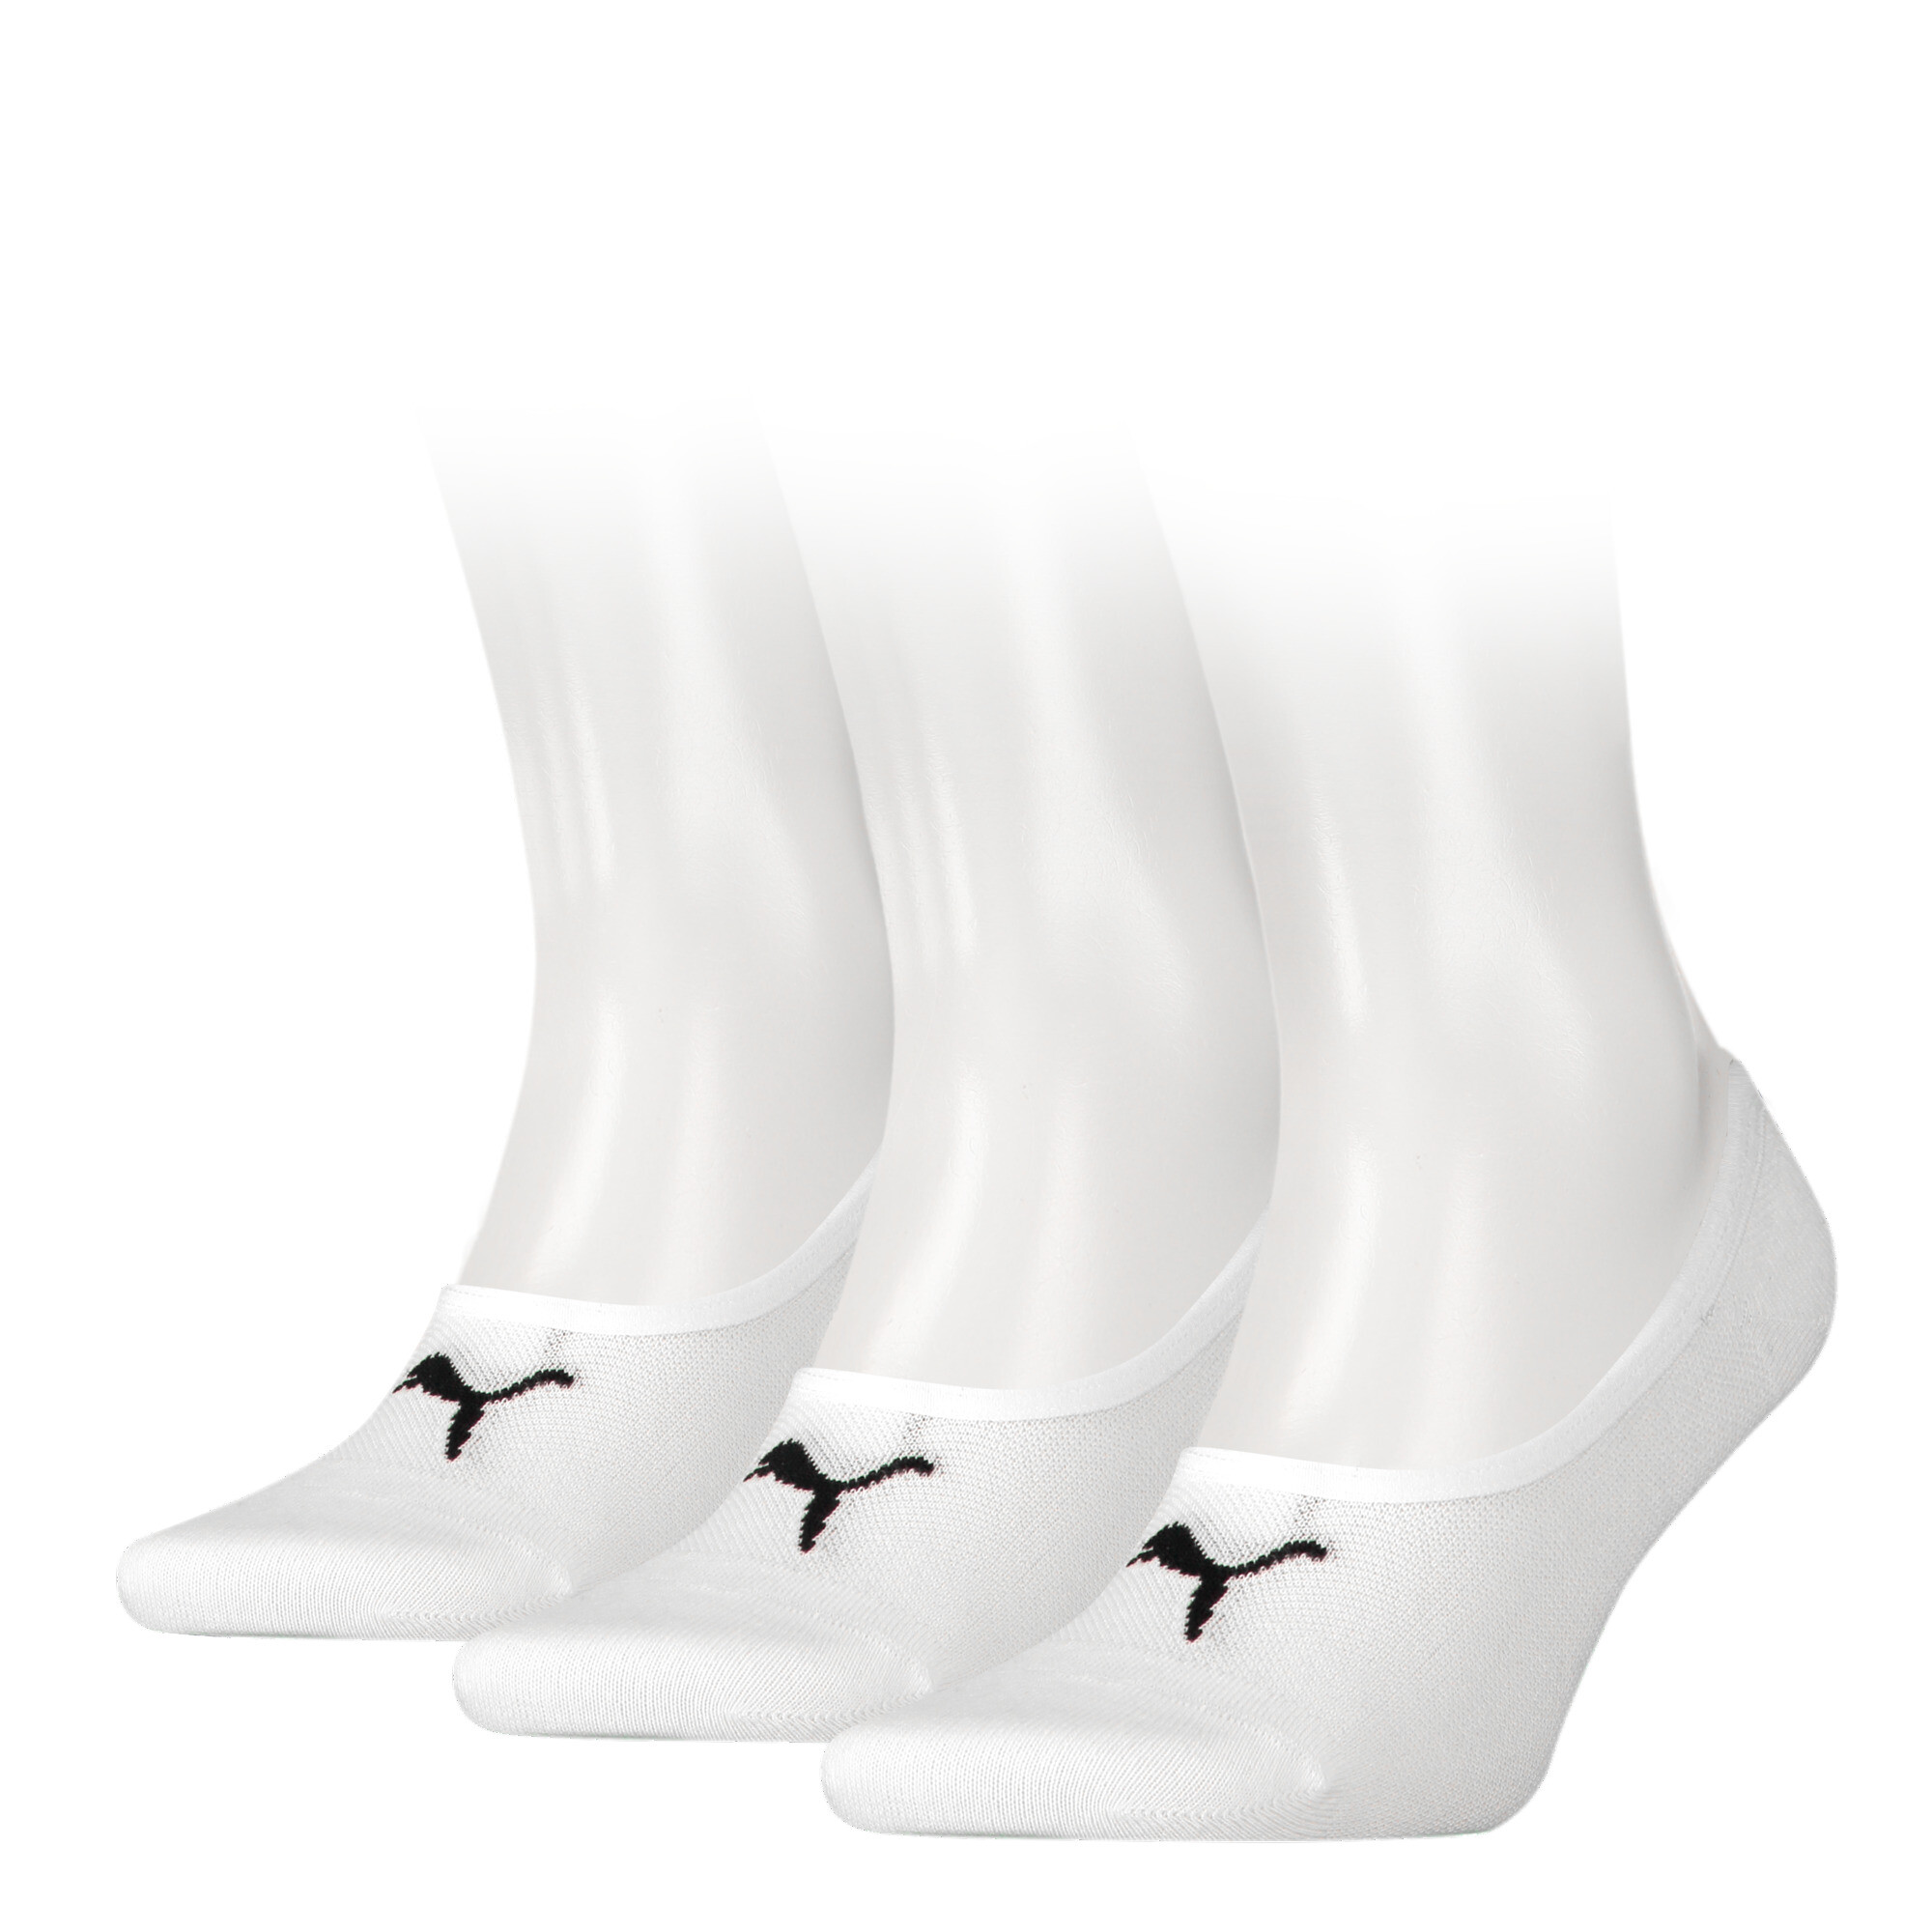 Unisex PUMA Footie 3 Pack In White, Size 43-46